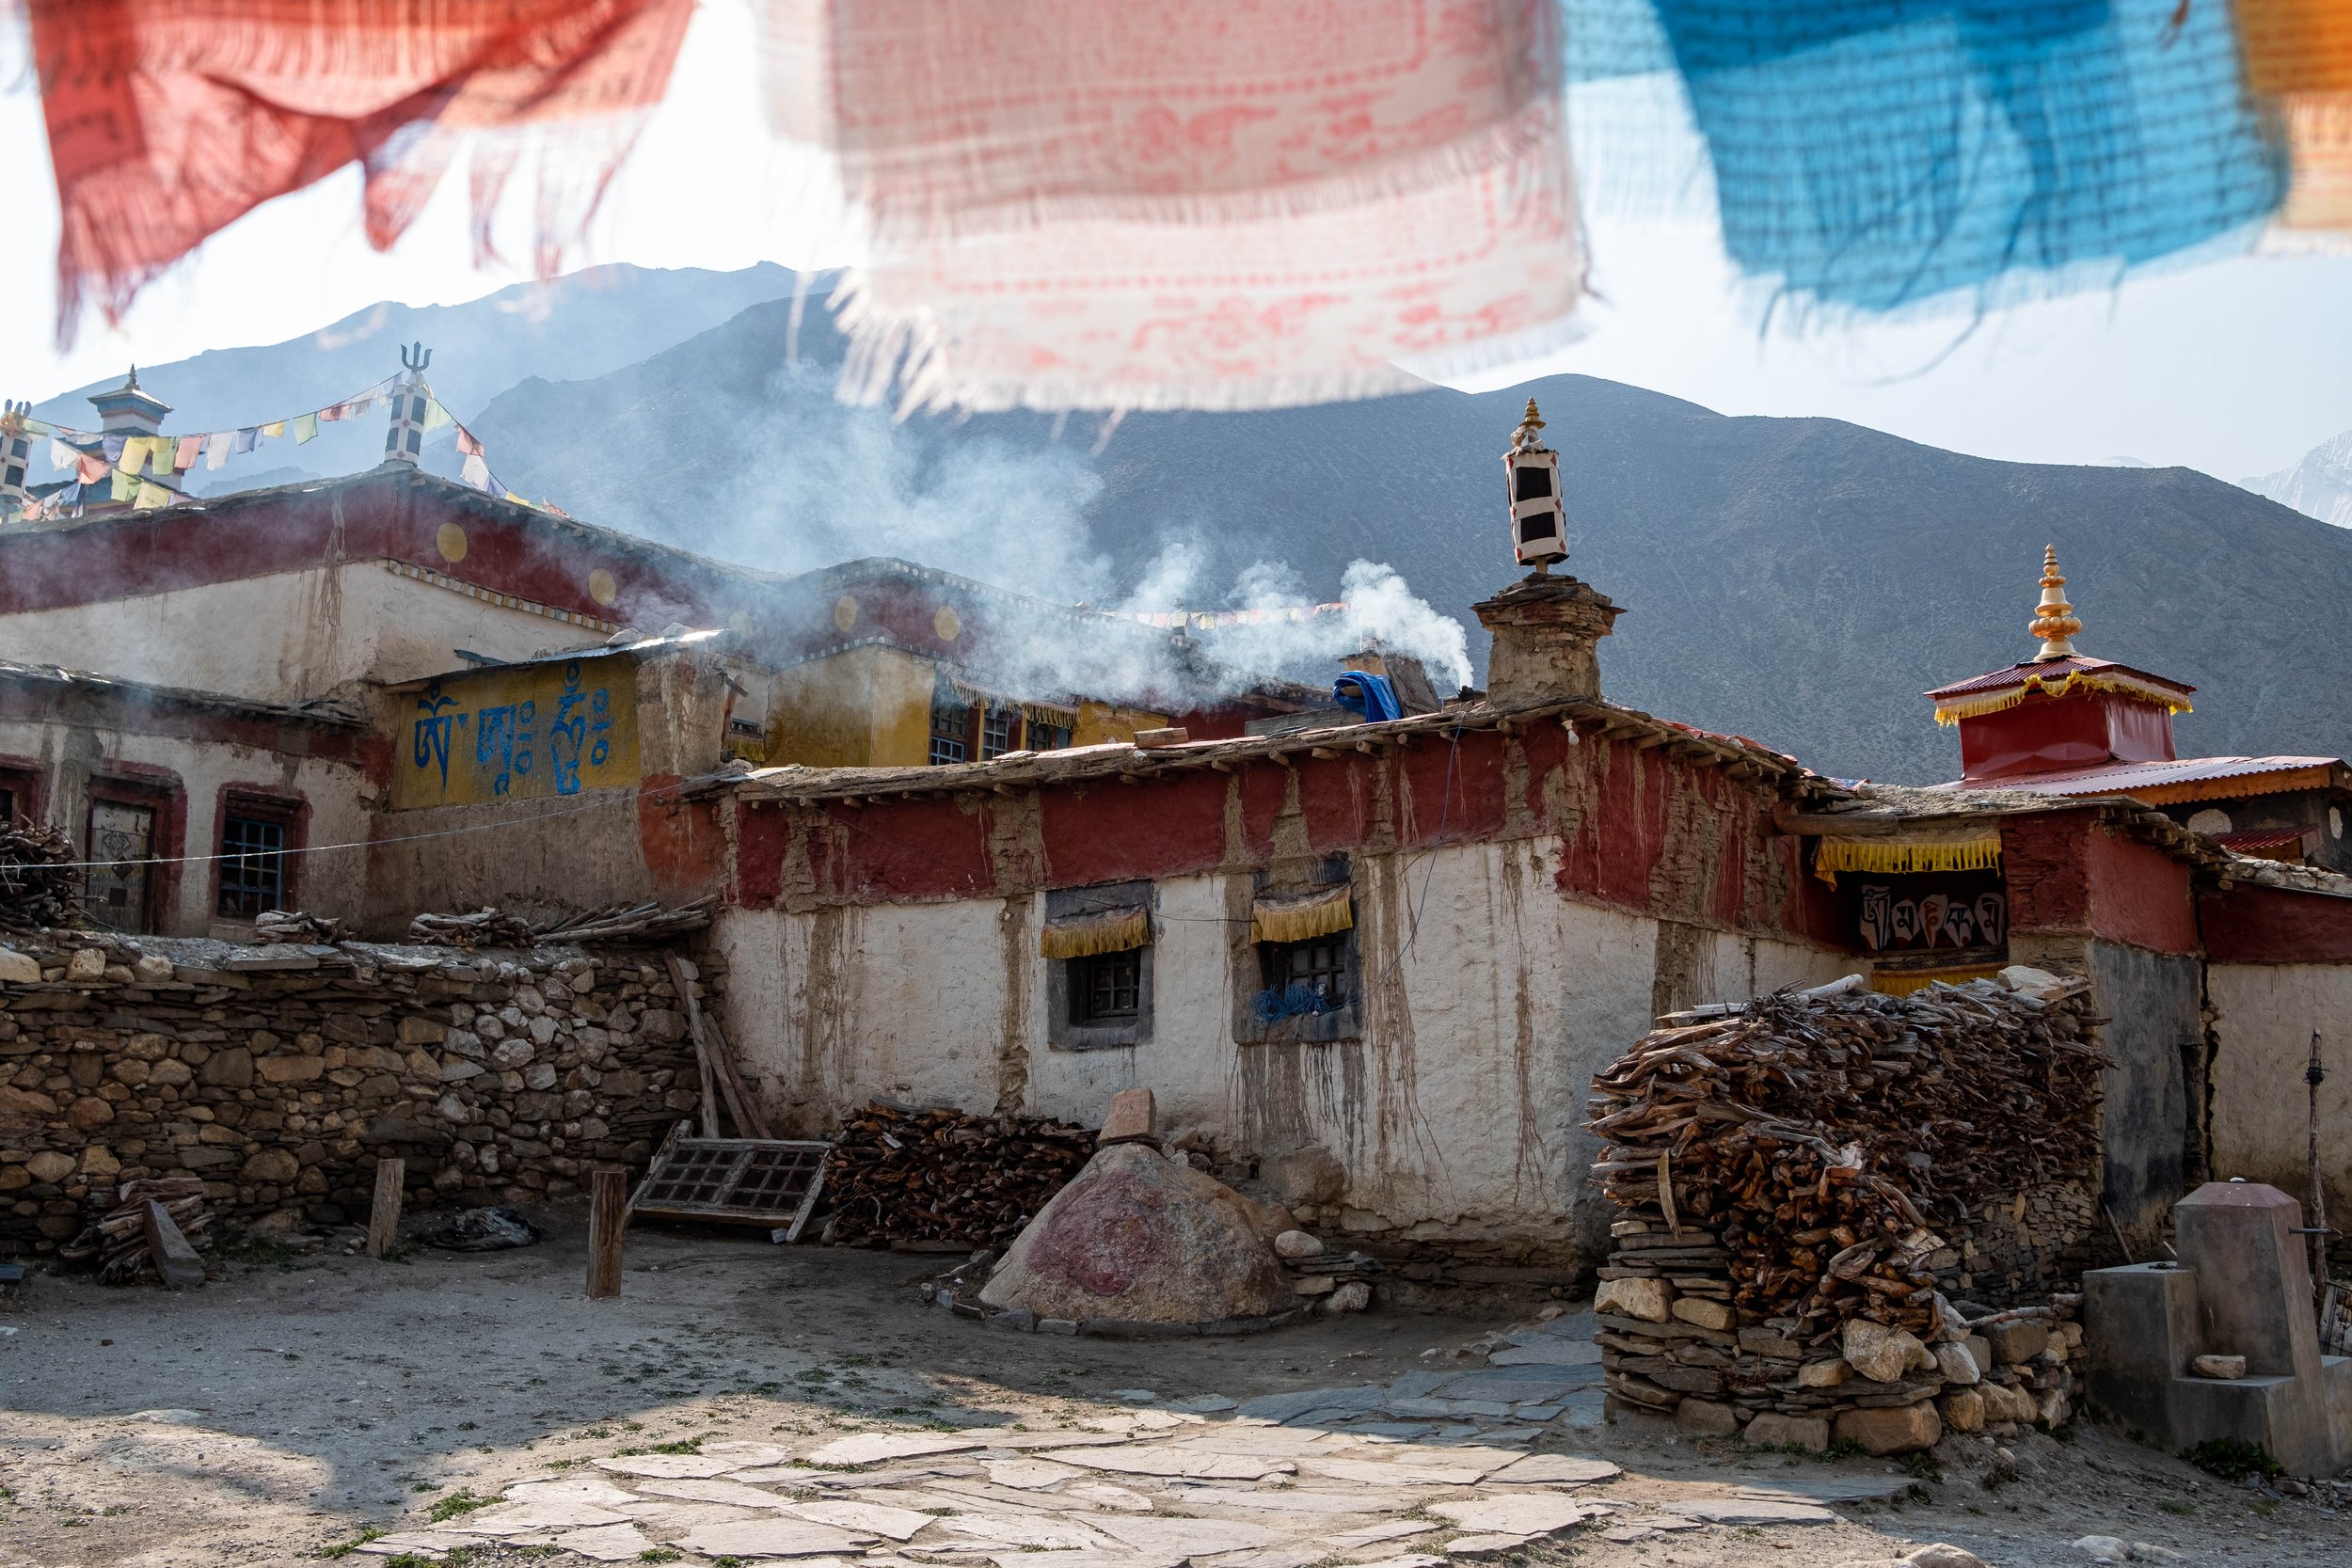  Tashi Lhakhang Gompa in Phu, Nepal for South China Morning Post 